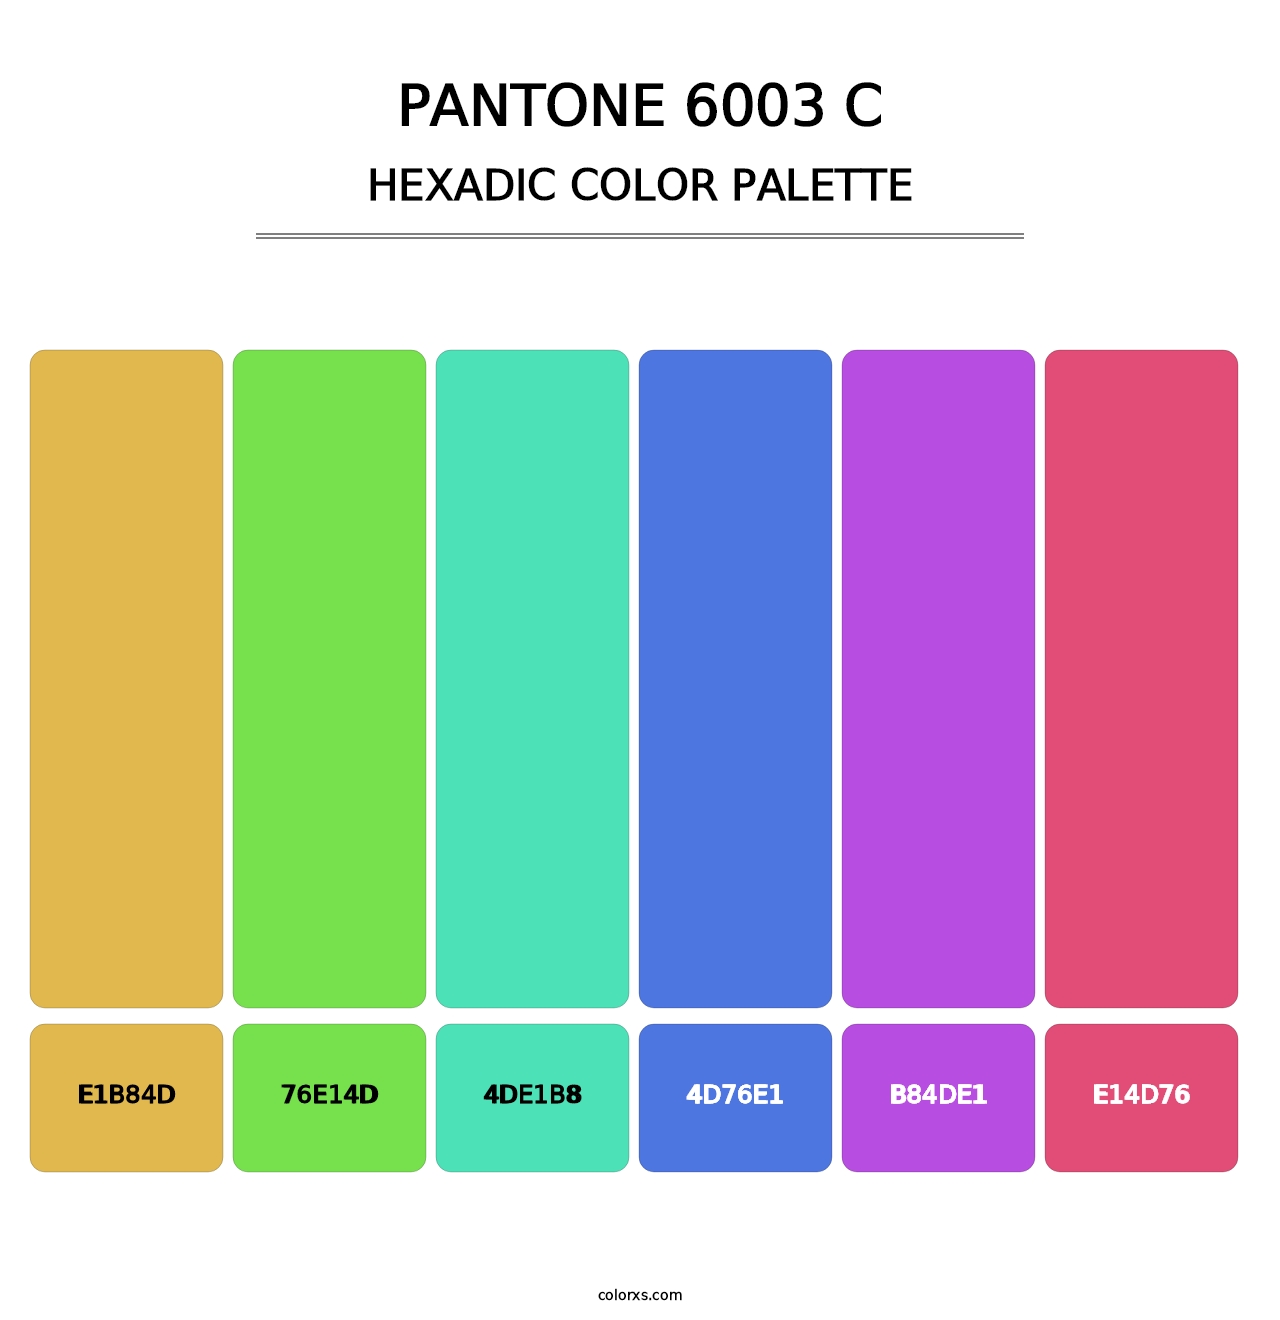 PANTONE 6003 C - Hexadic Color Palette